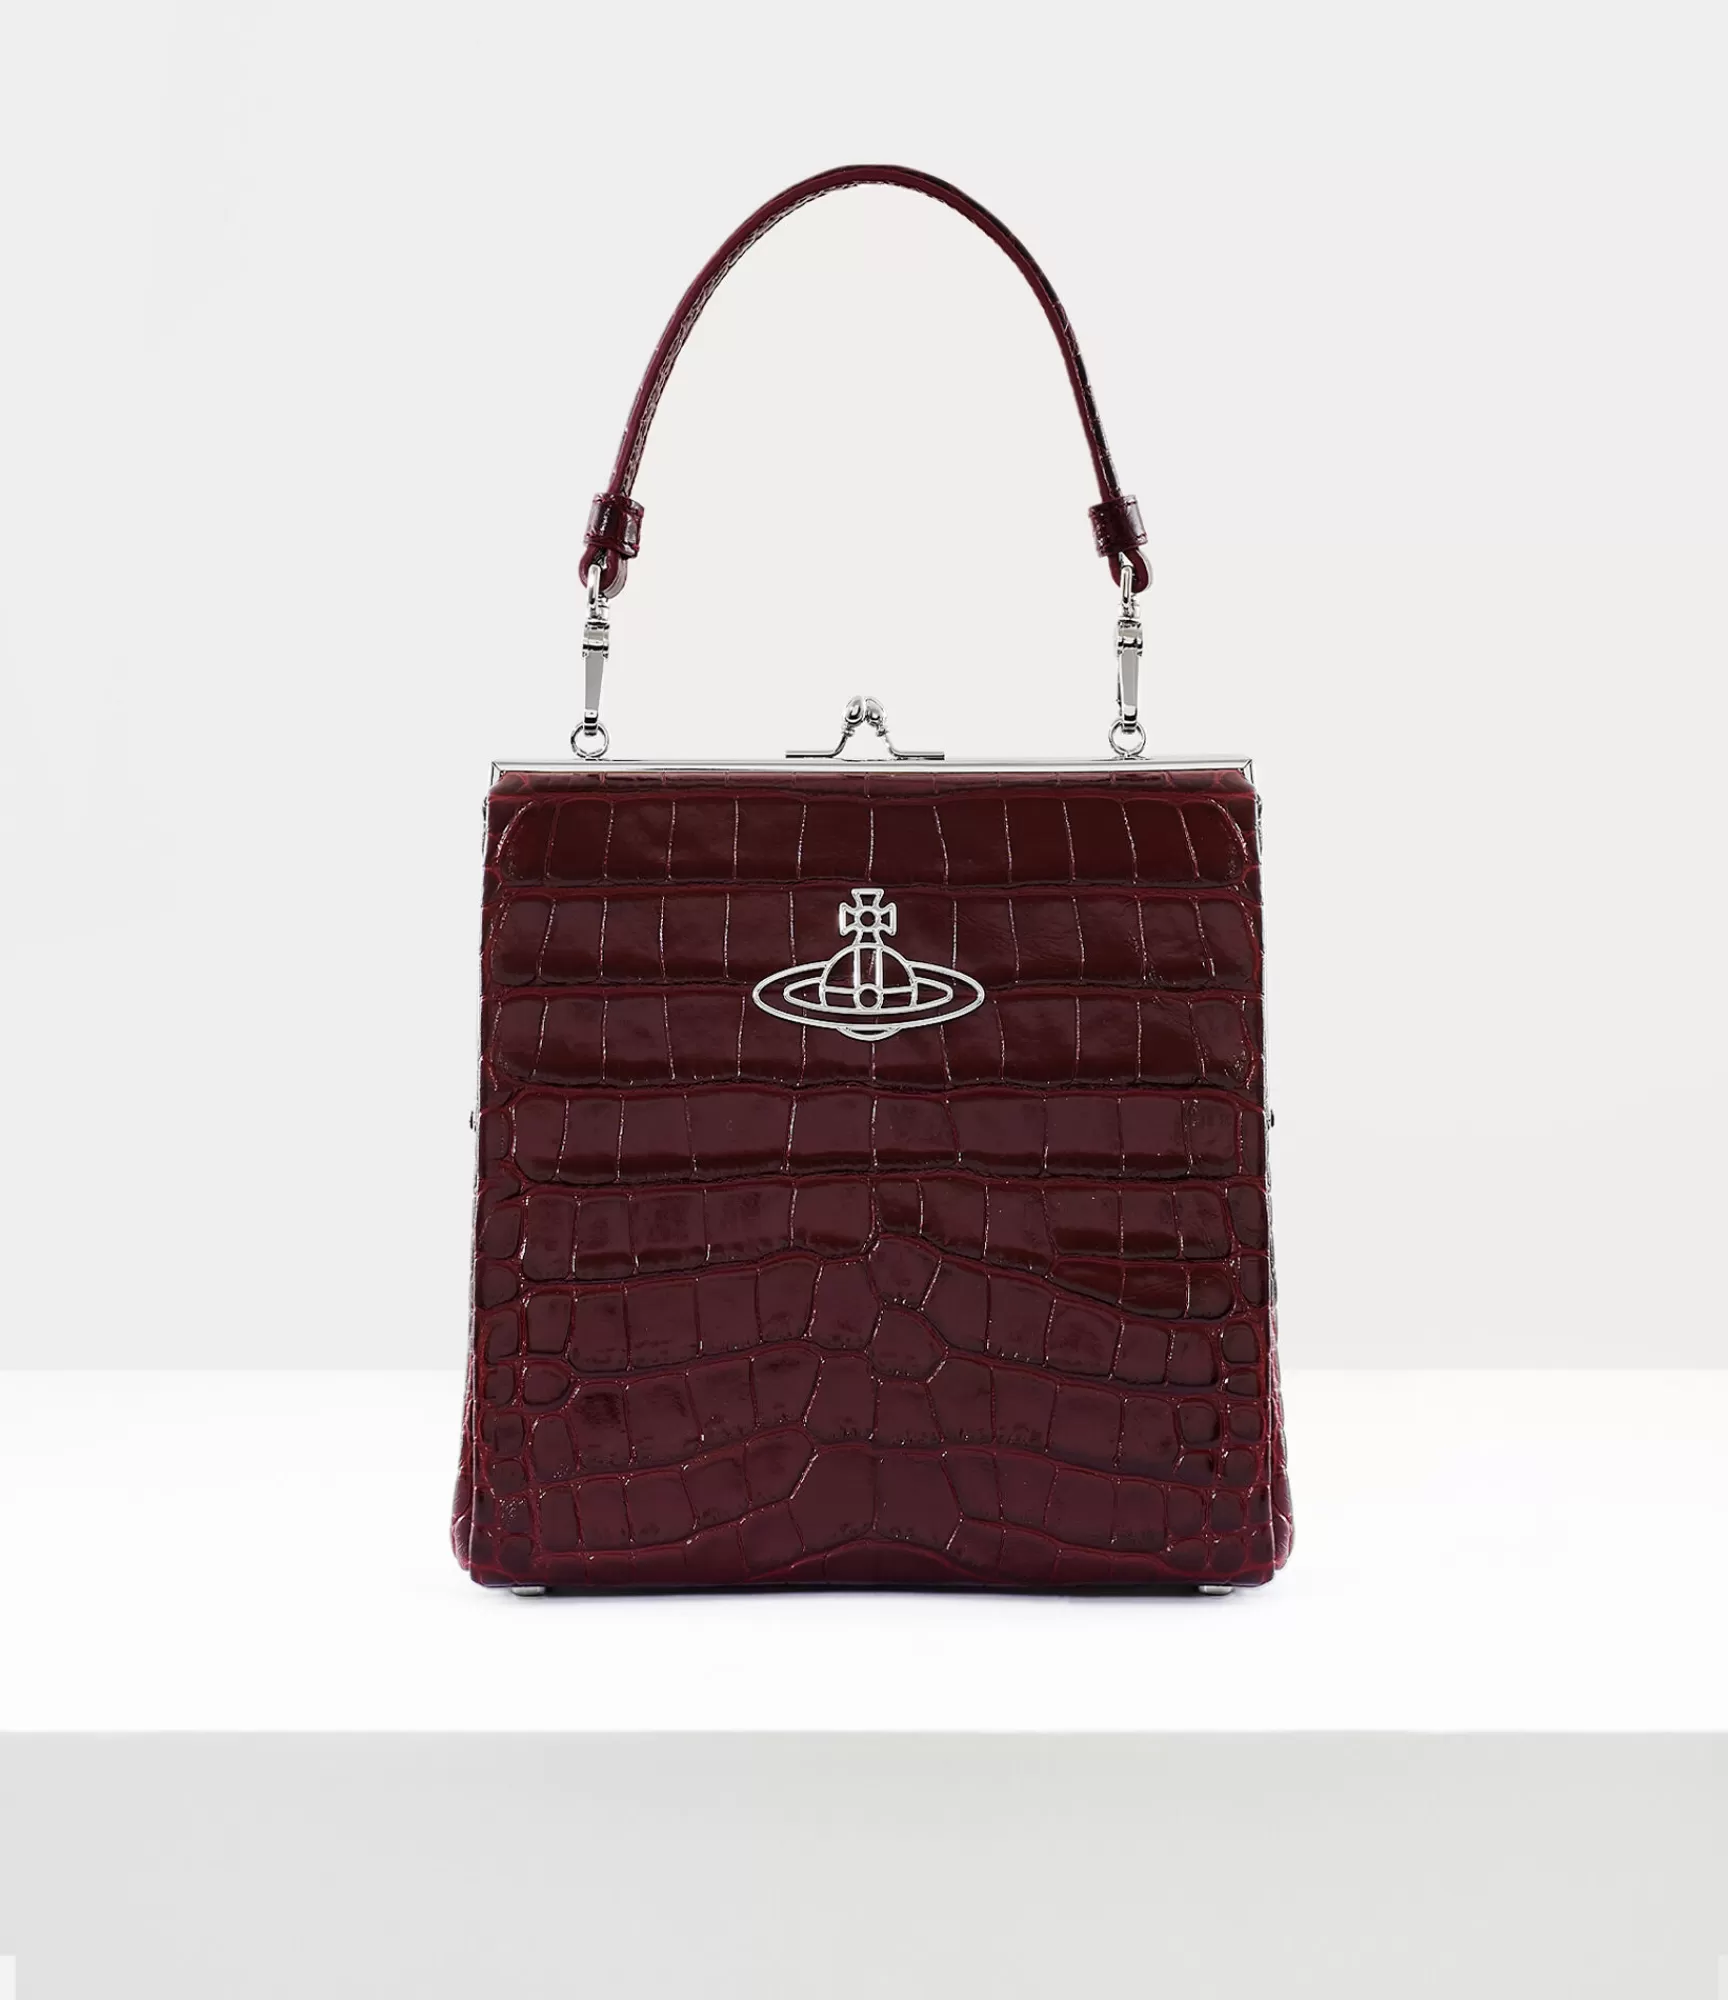 Vivienne Westwood Handbags*Square frame purse Burgundy